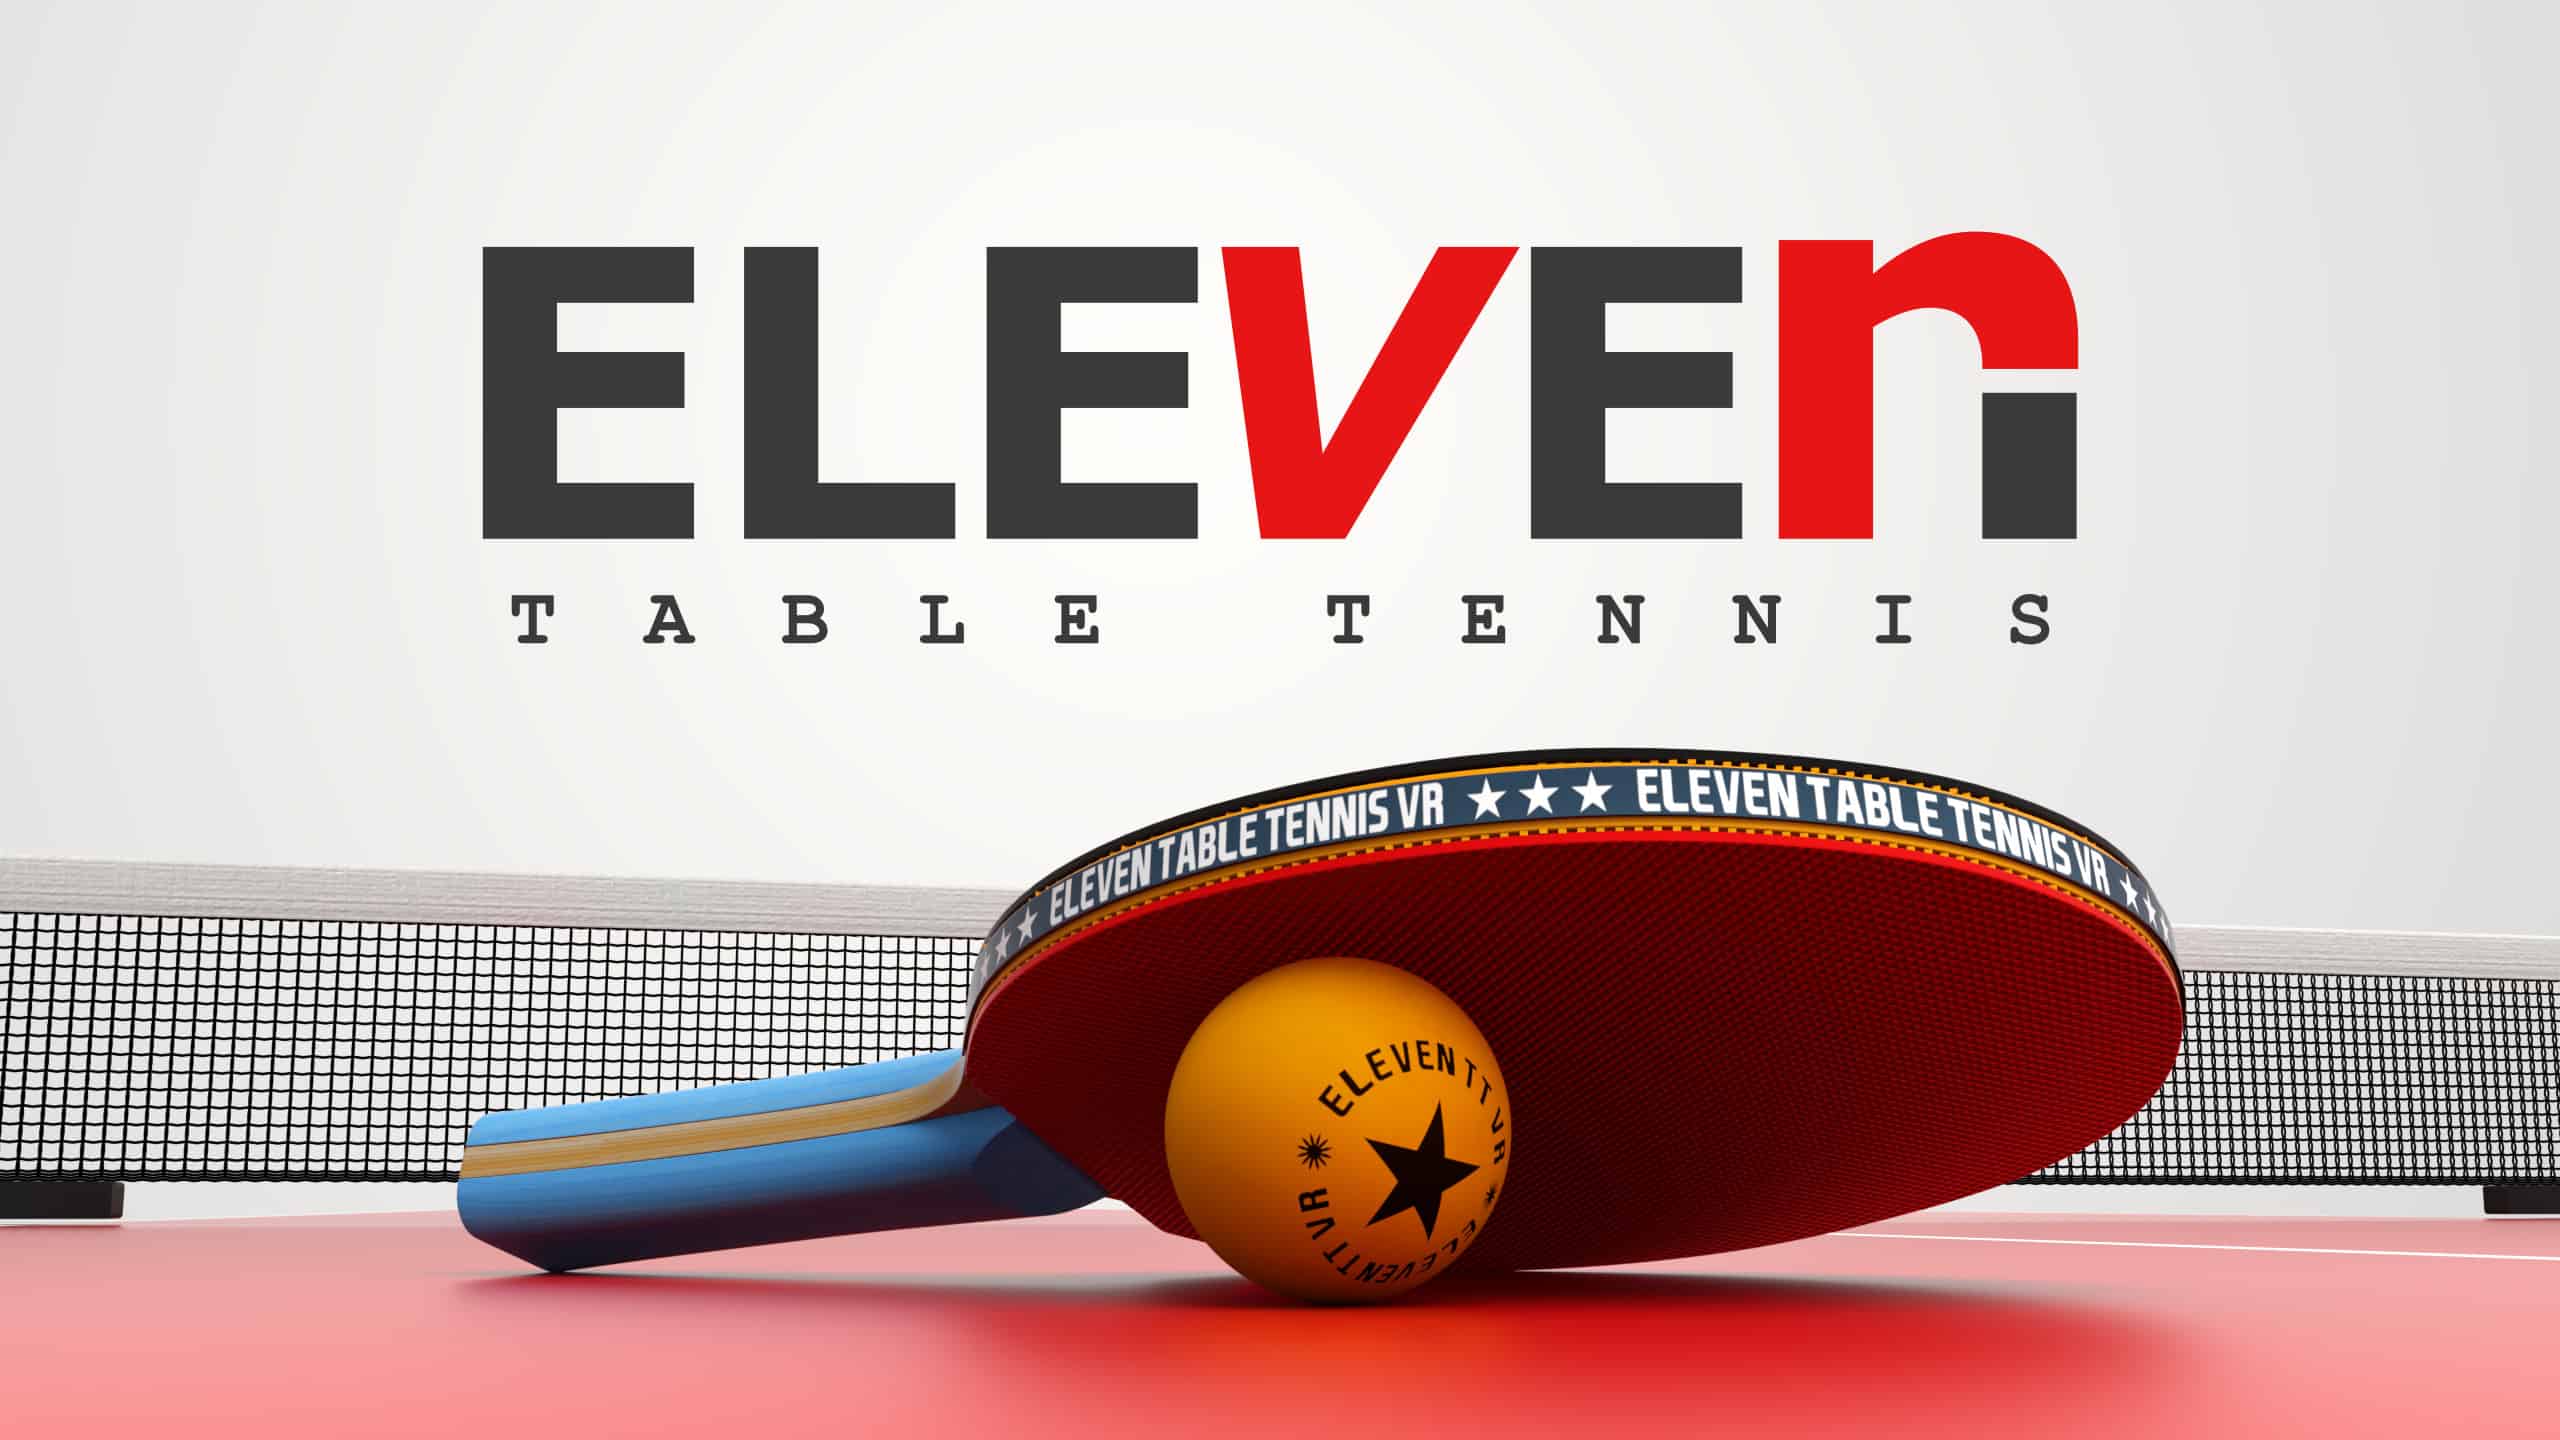 Eleven table tennis steam